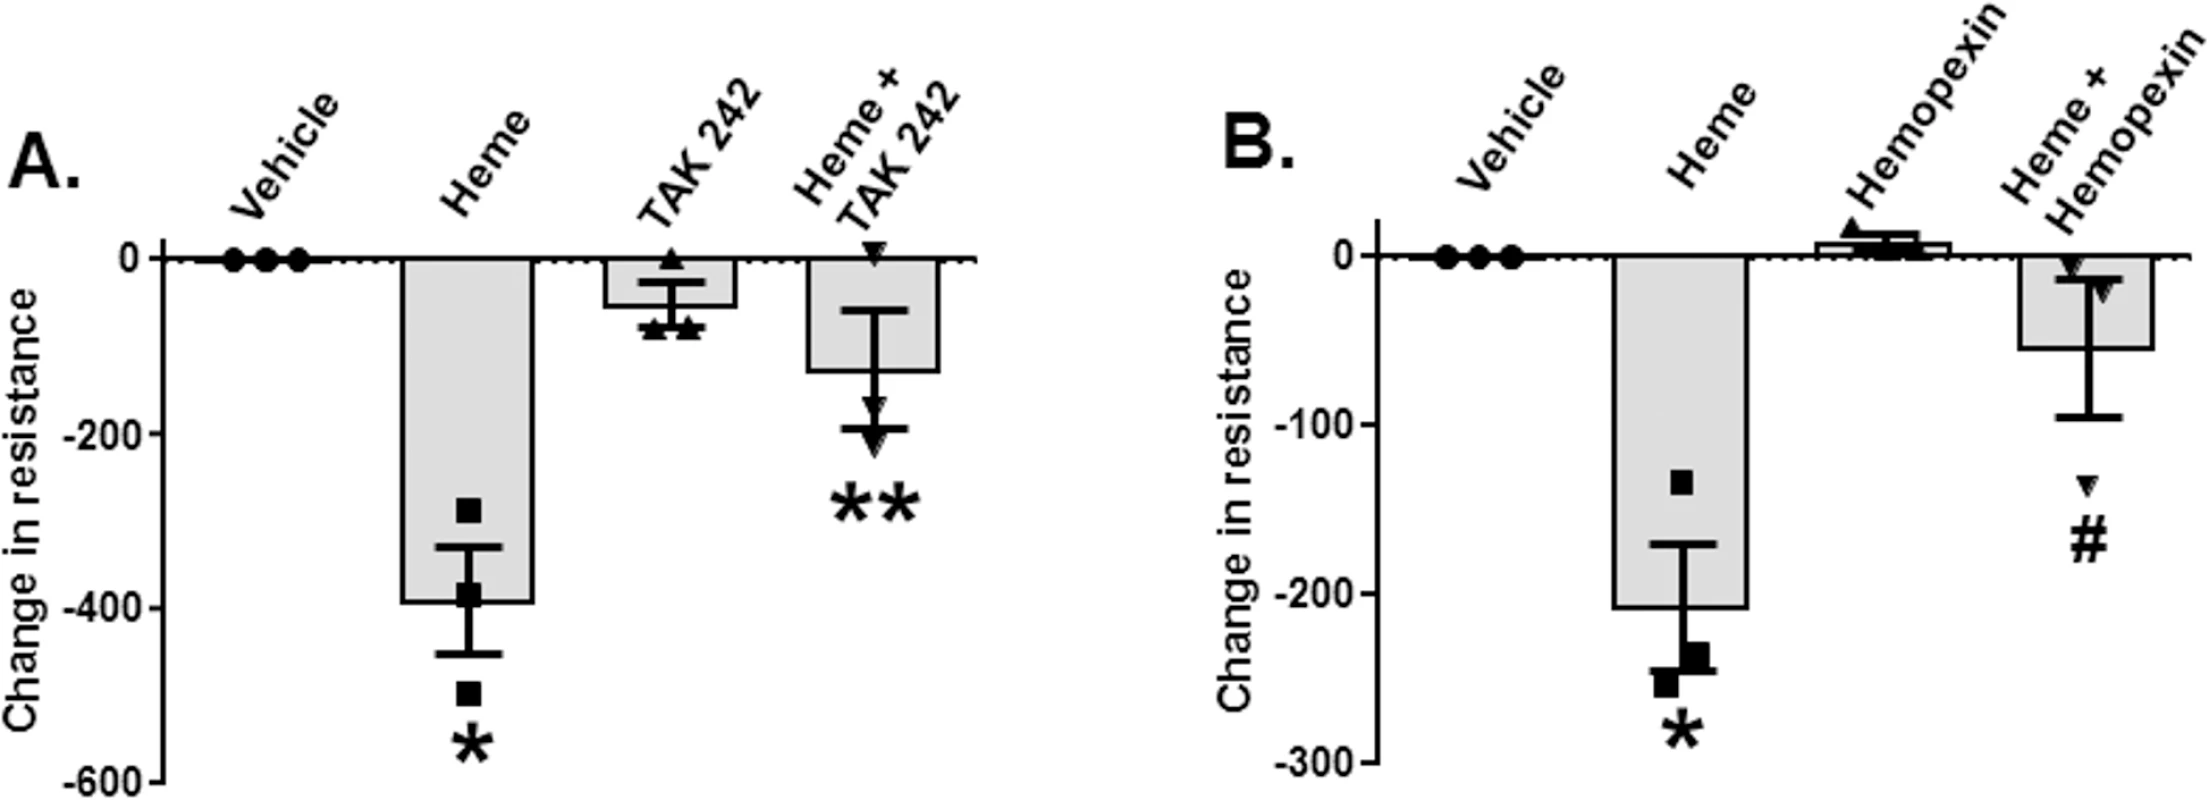 Heme-dependent decreases in endothelial barrier resistance are TLR4-dependent.